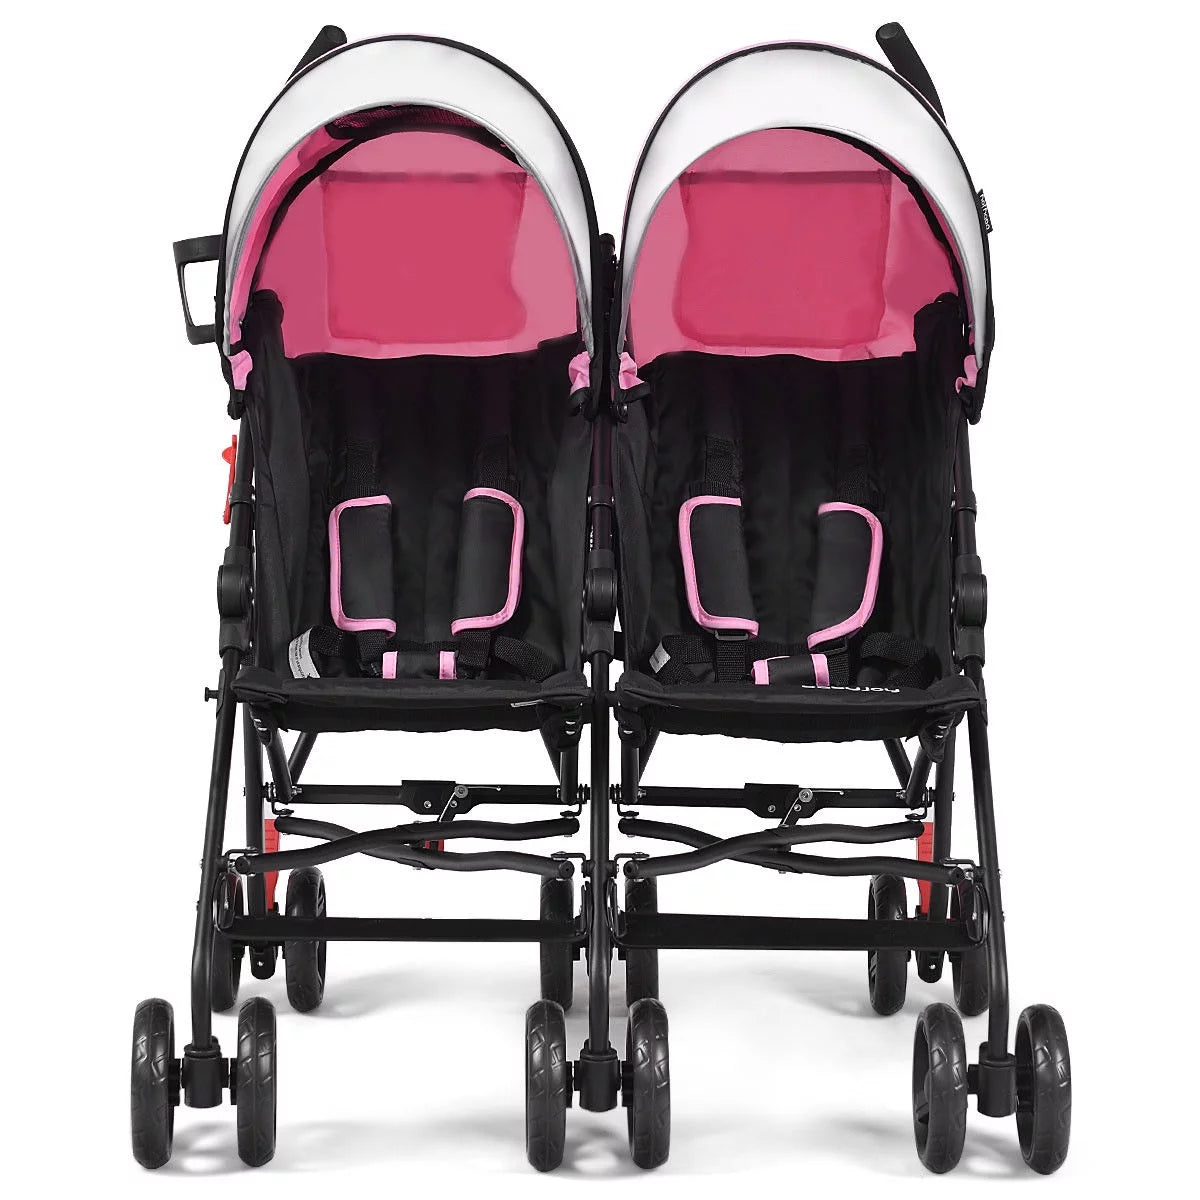 Baby-Joy Foldable Twin Baby Double Stroller Kids Ultralight Umbrella Stroller Pushchair Pink